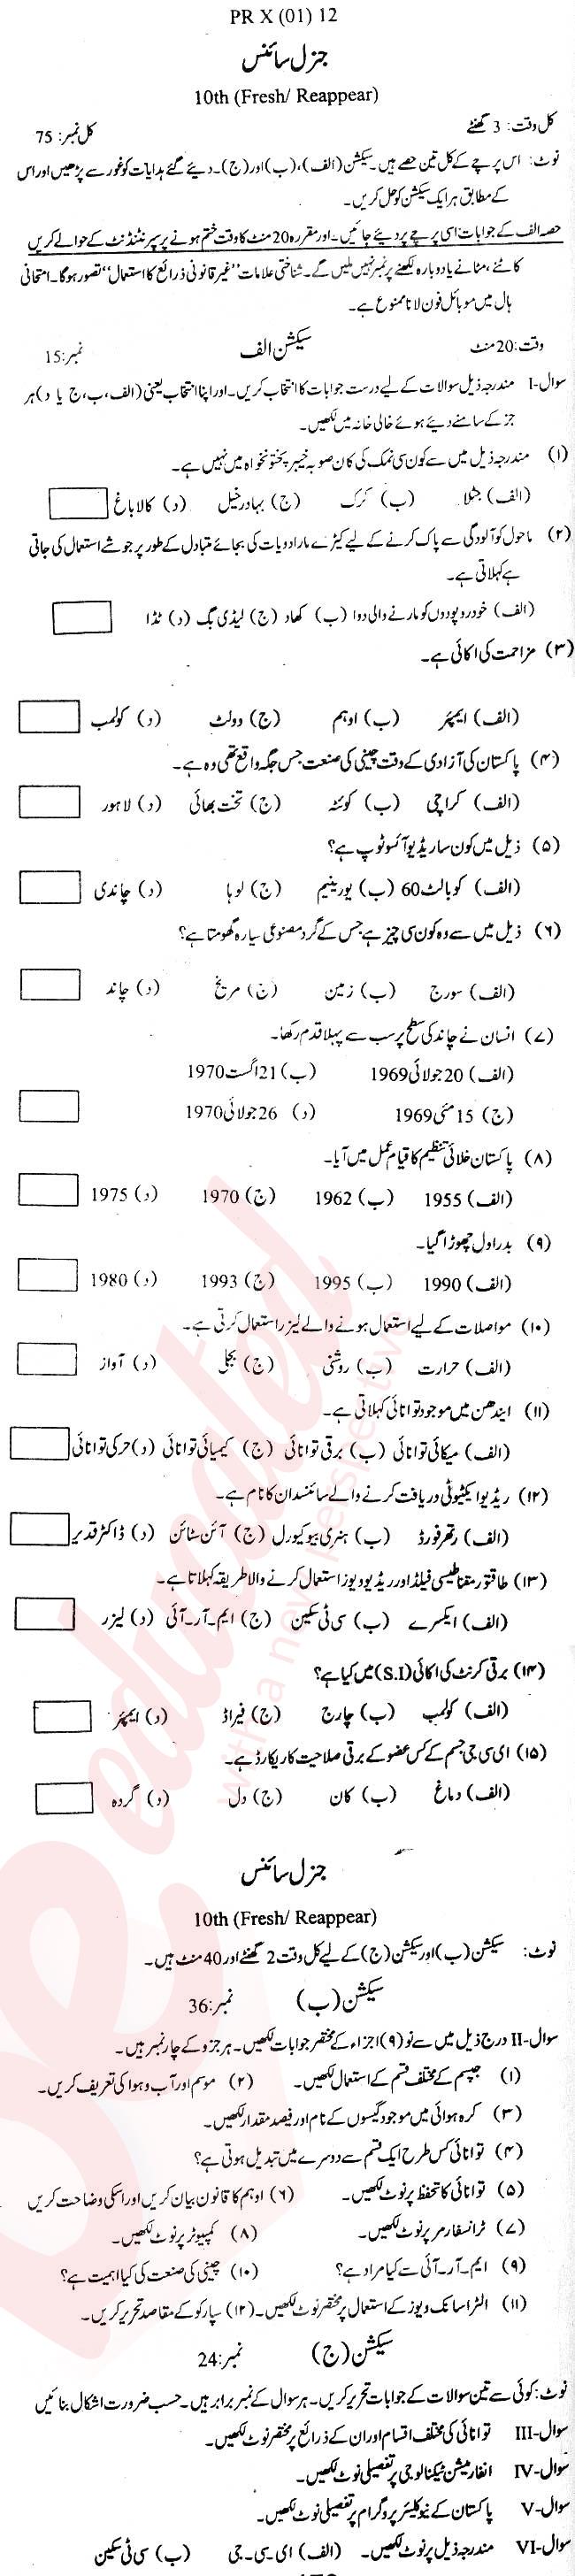 General Science 10th Urdu Medium Past Paper Group 1 BISE Abbottabad 2012